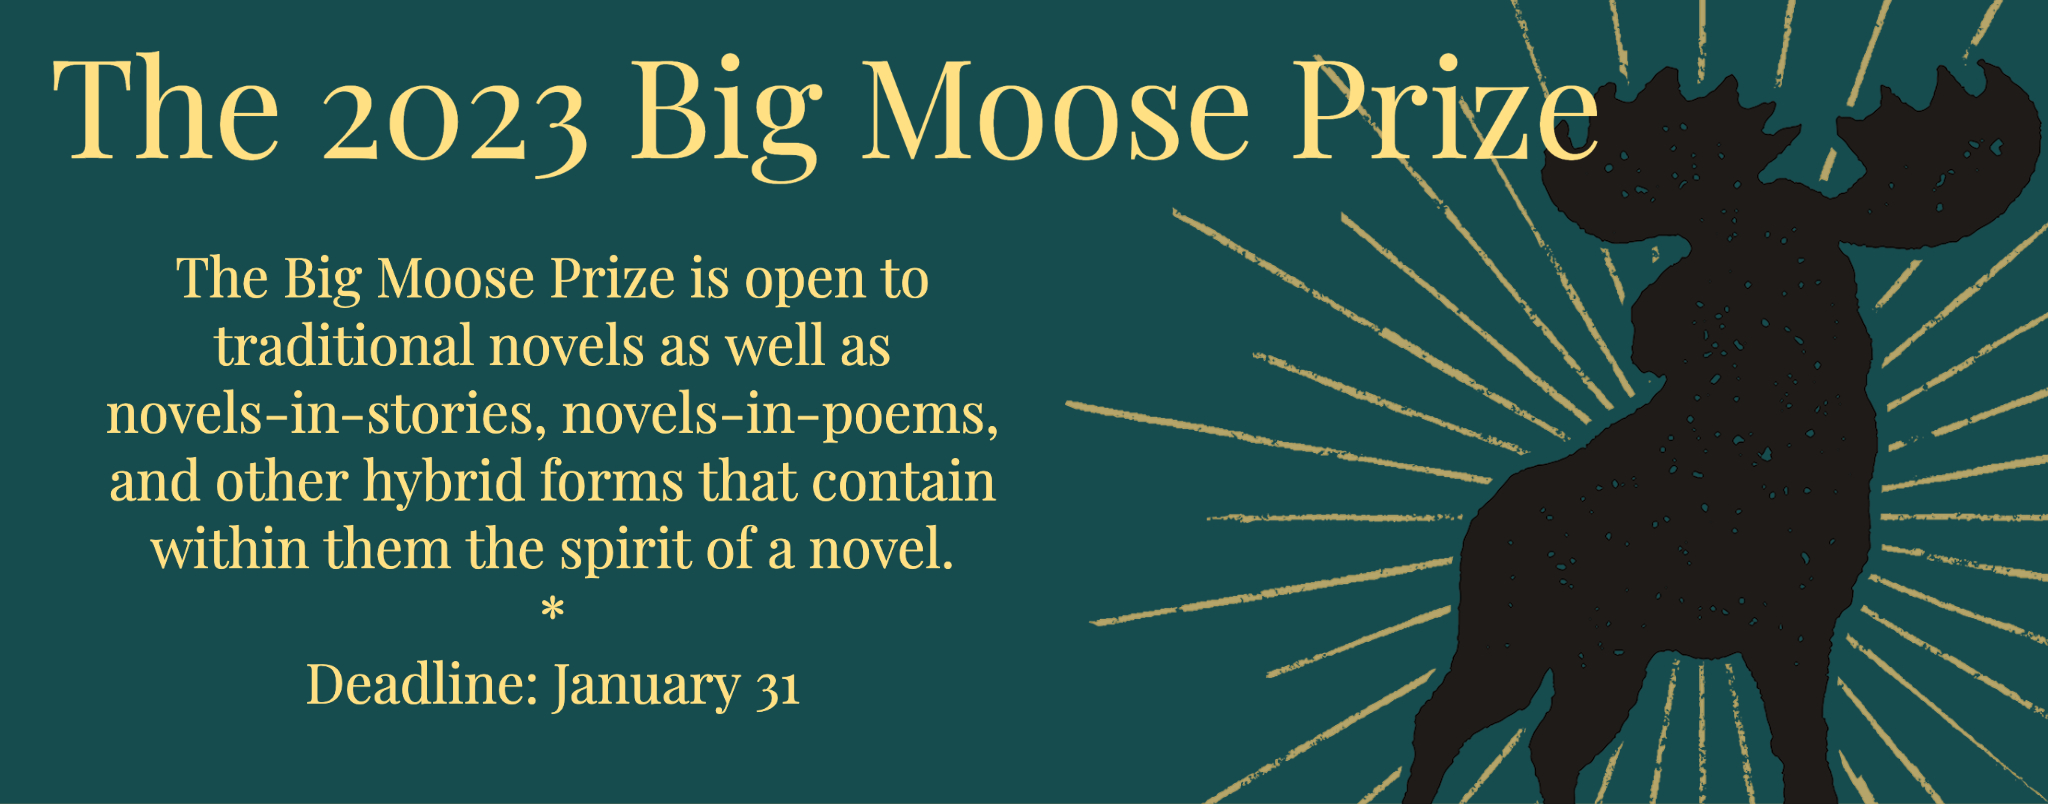 The Big Moose Prize